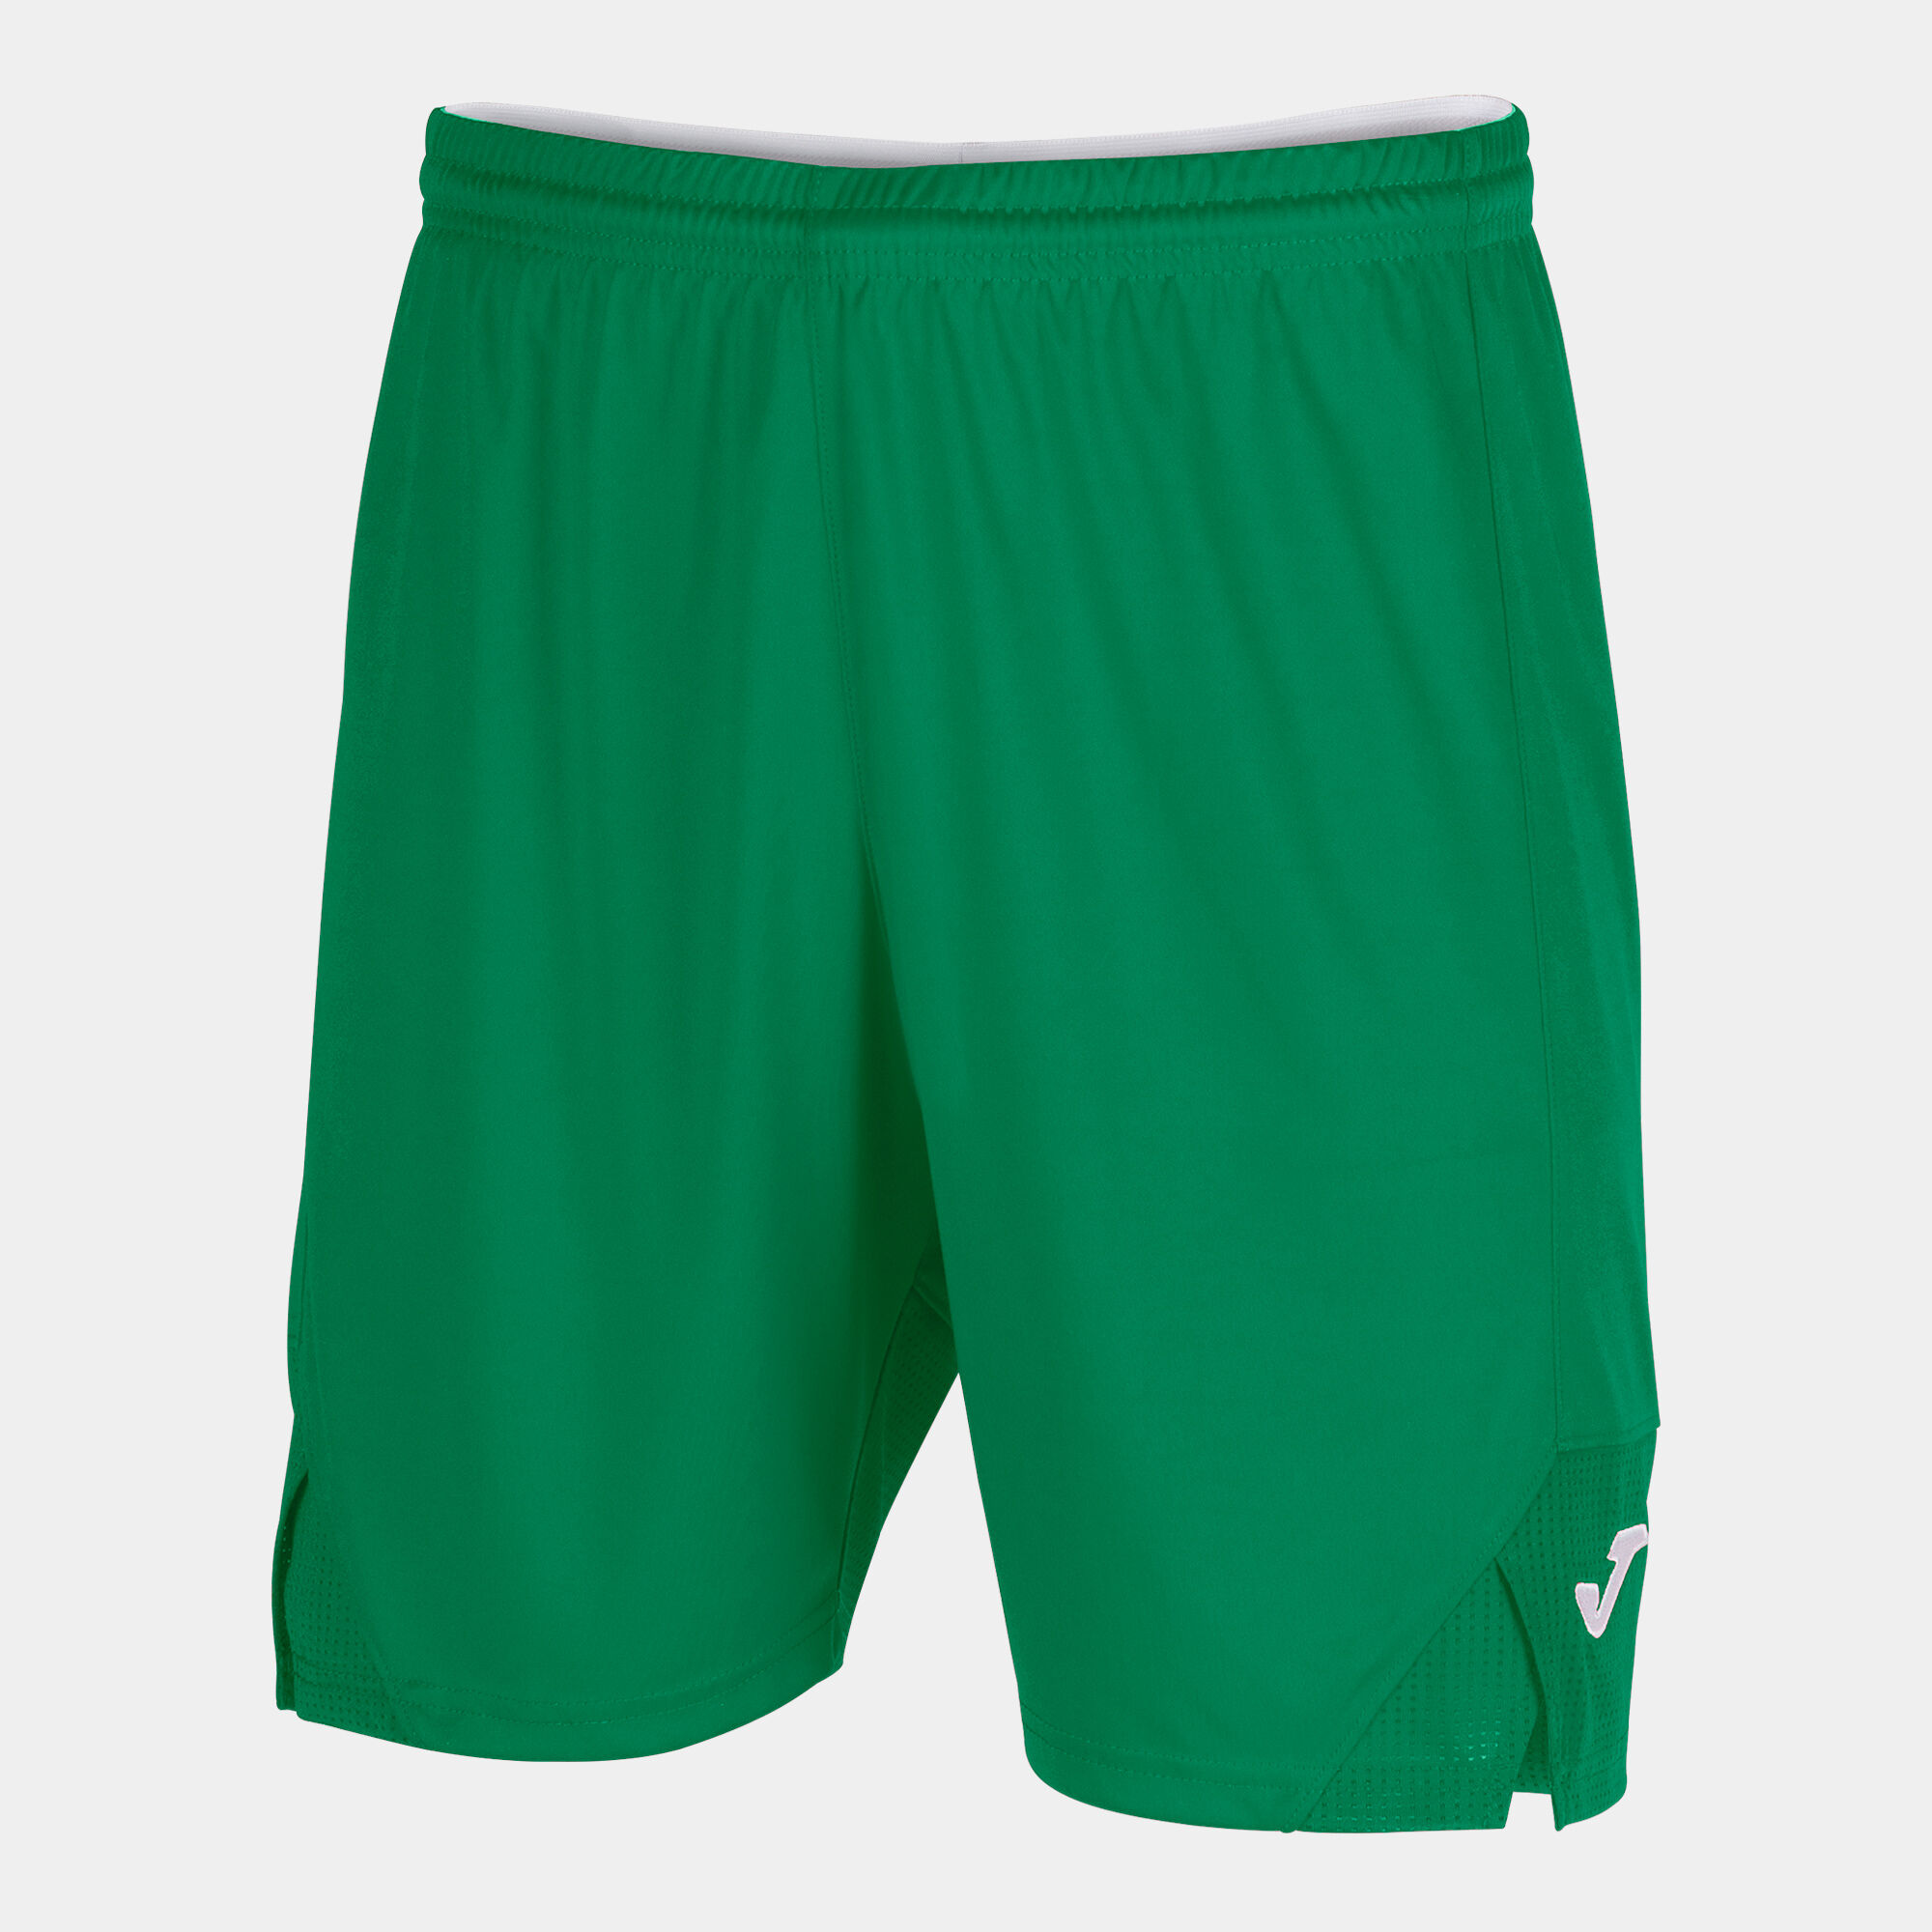 Shorts man Toledo II green